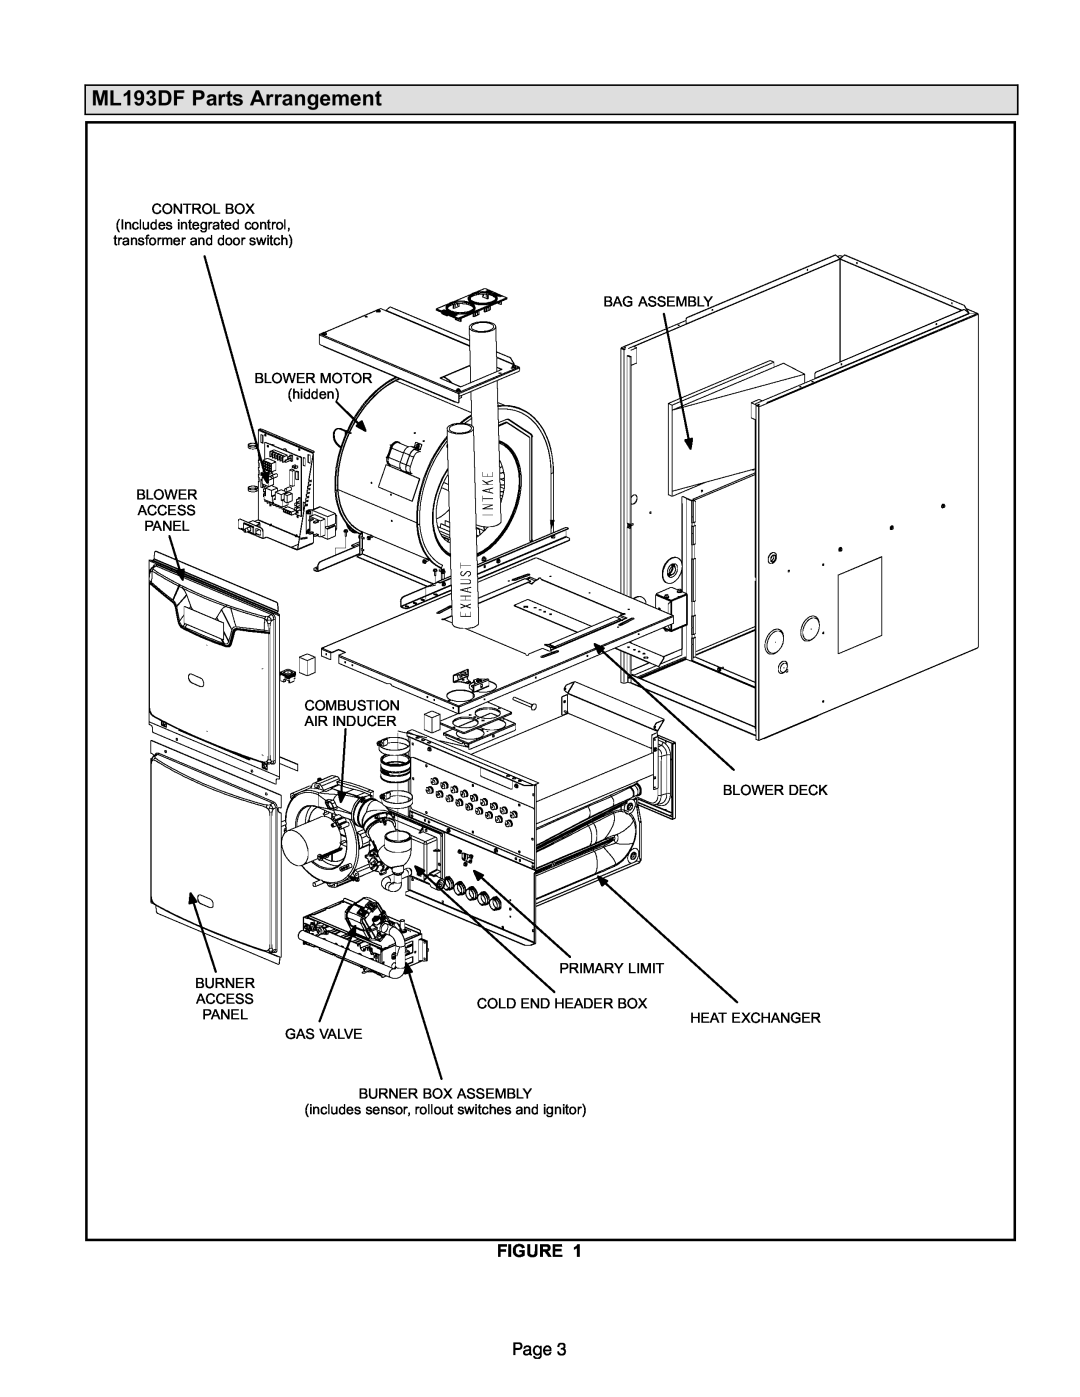 Lennox International Inc MERIT SERIES GAS FURNACE DOWNFLOW AIR DISCHARGE ML193DF Parts Arrangement, Page 